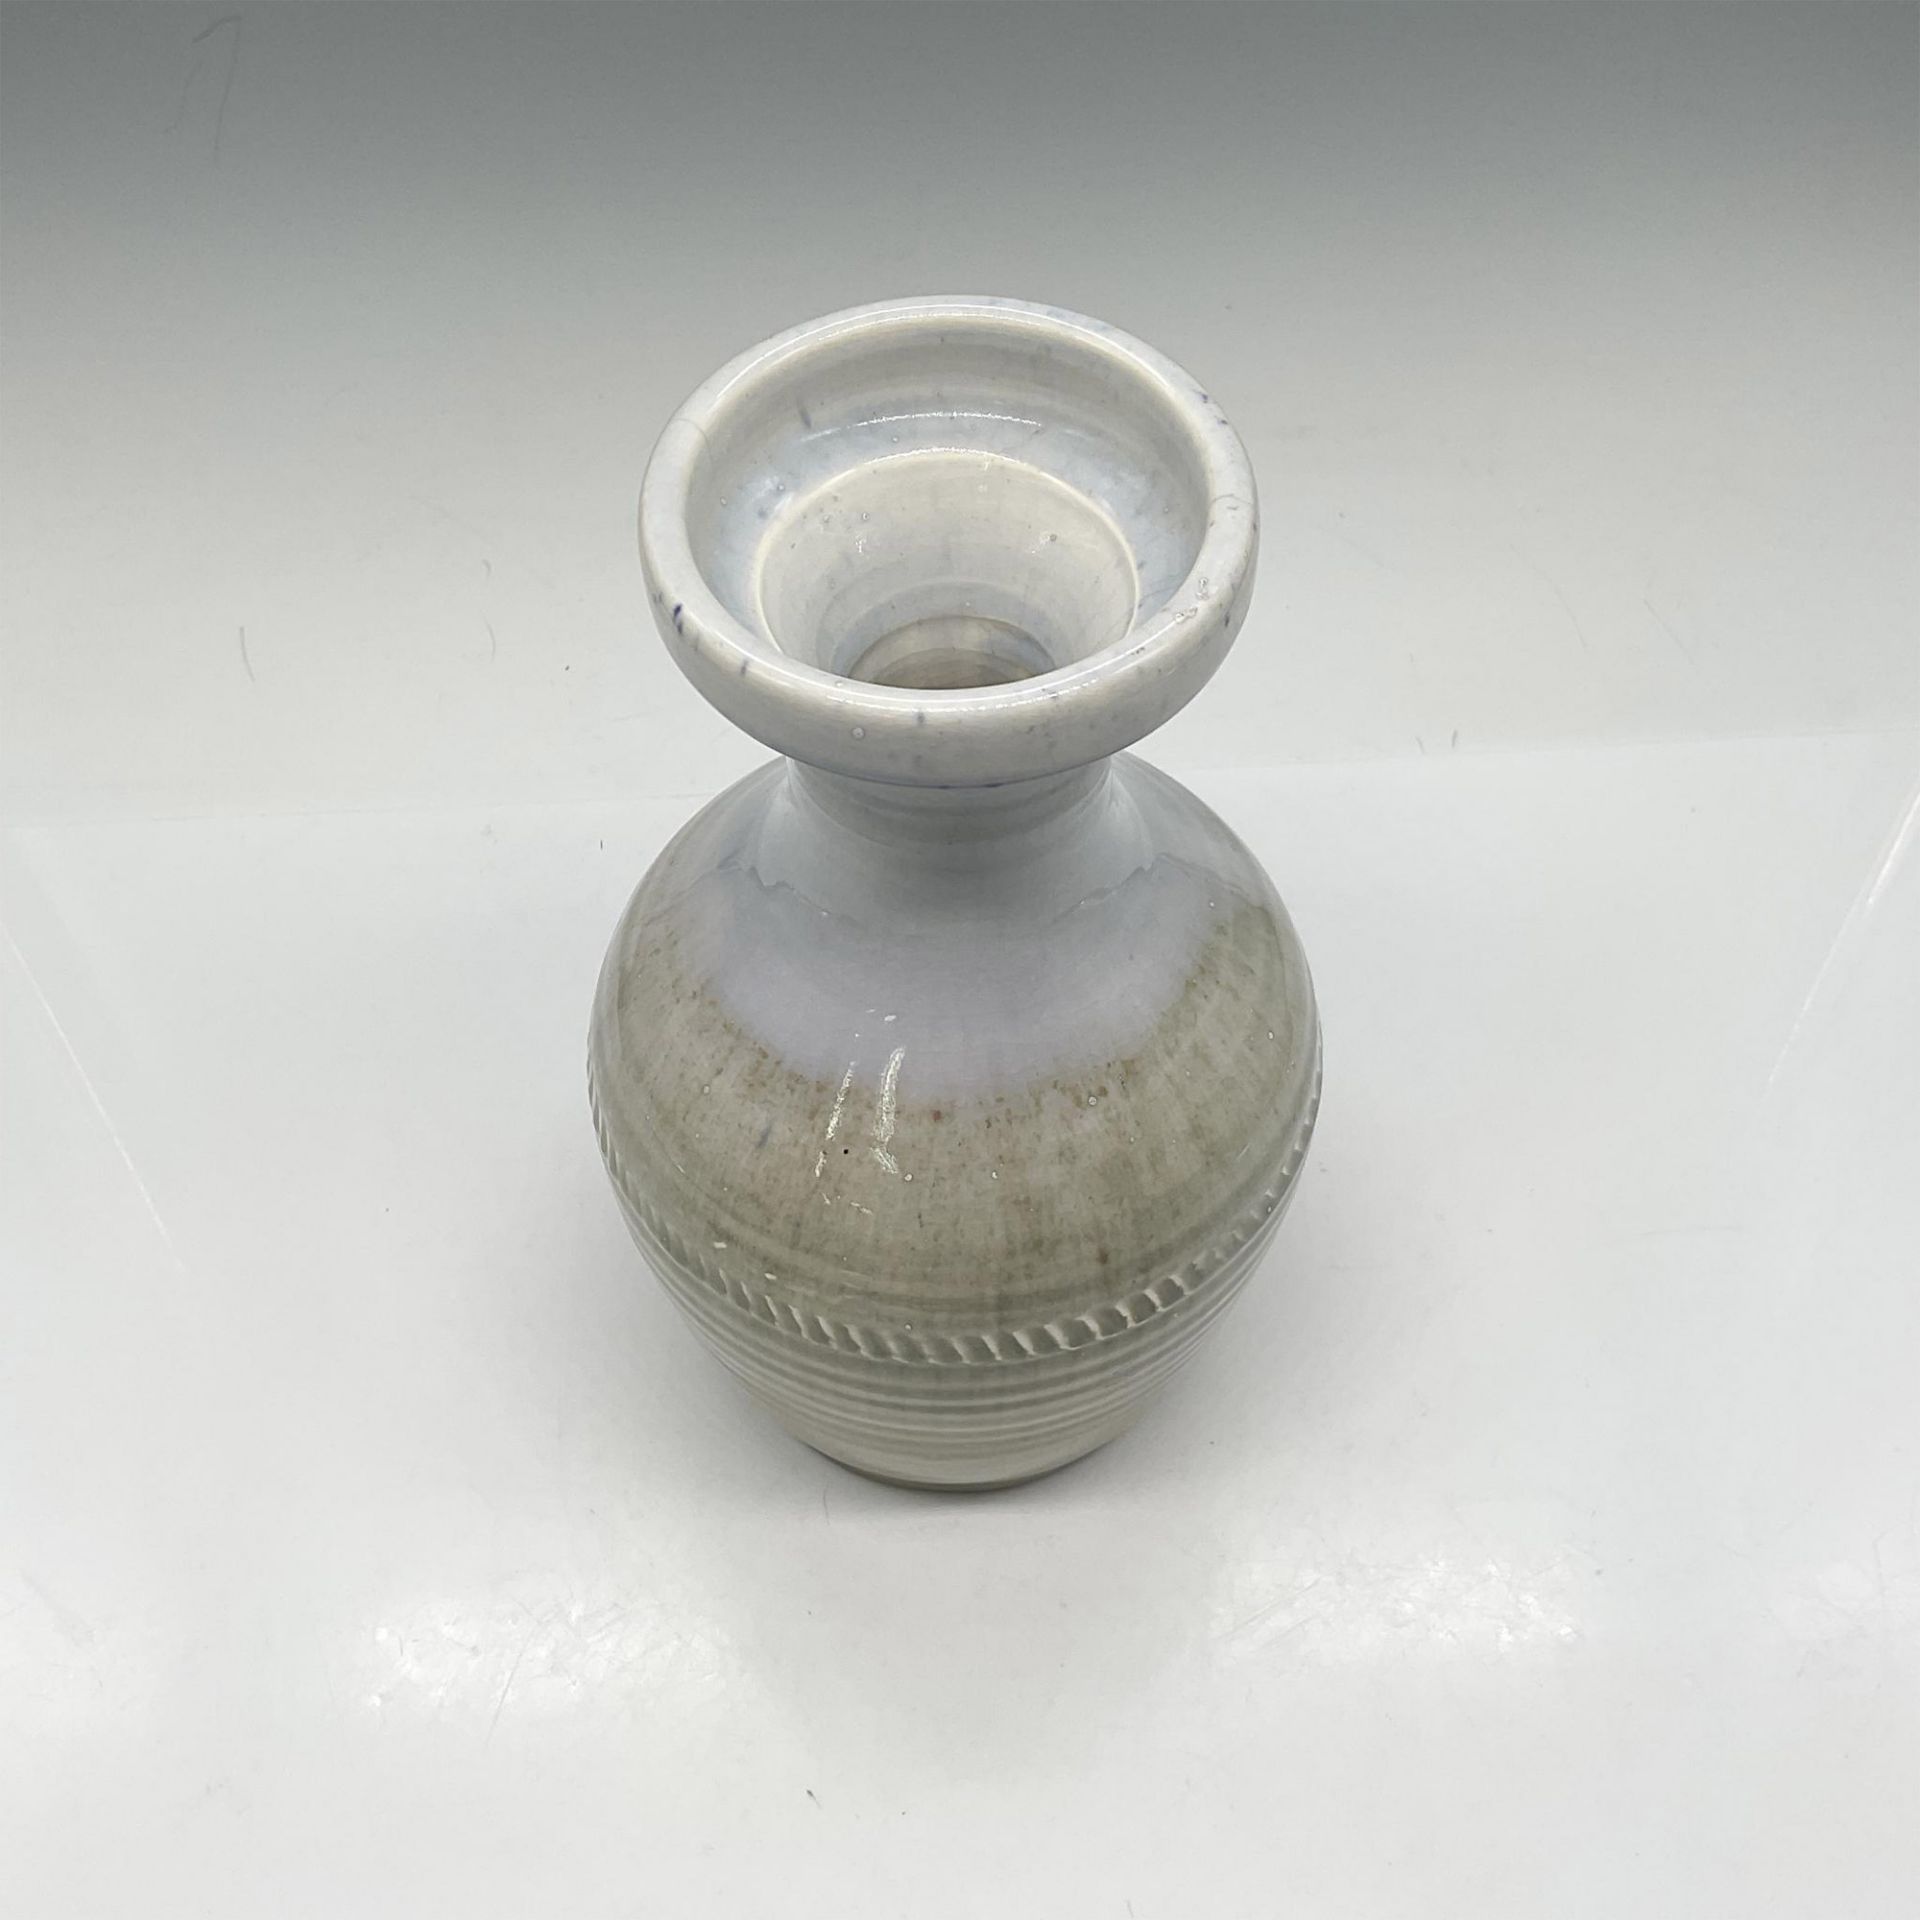 Moorcroft Pottery Natural Studio Line Vase - Image 2 of 3